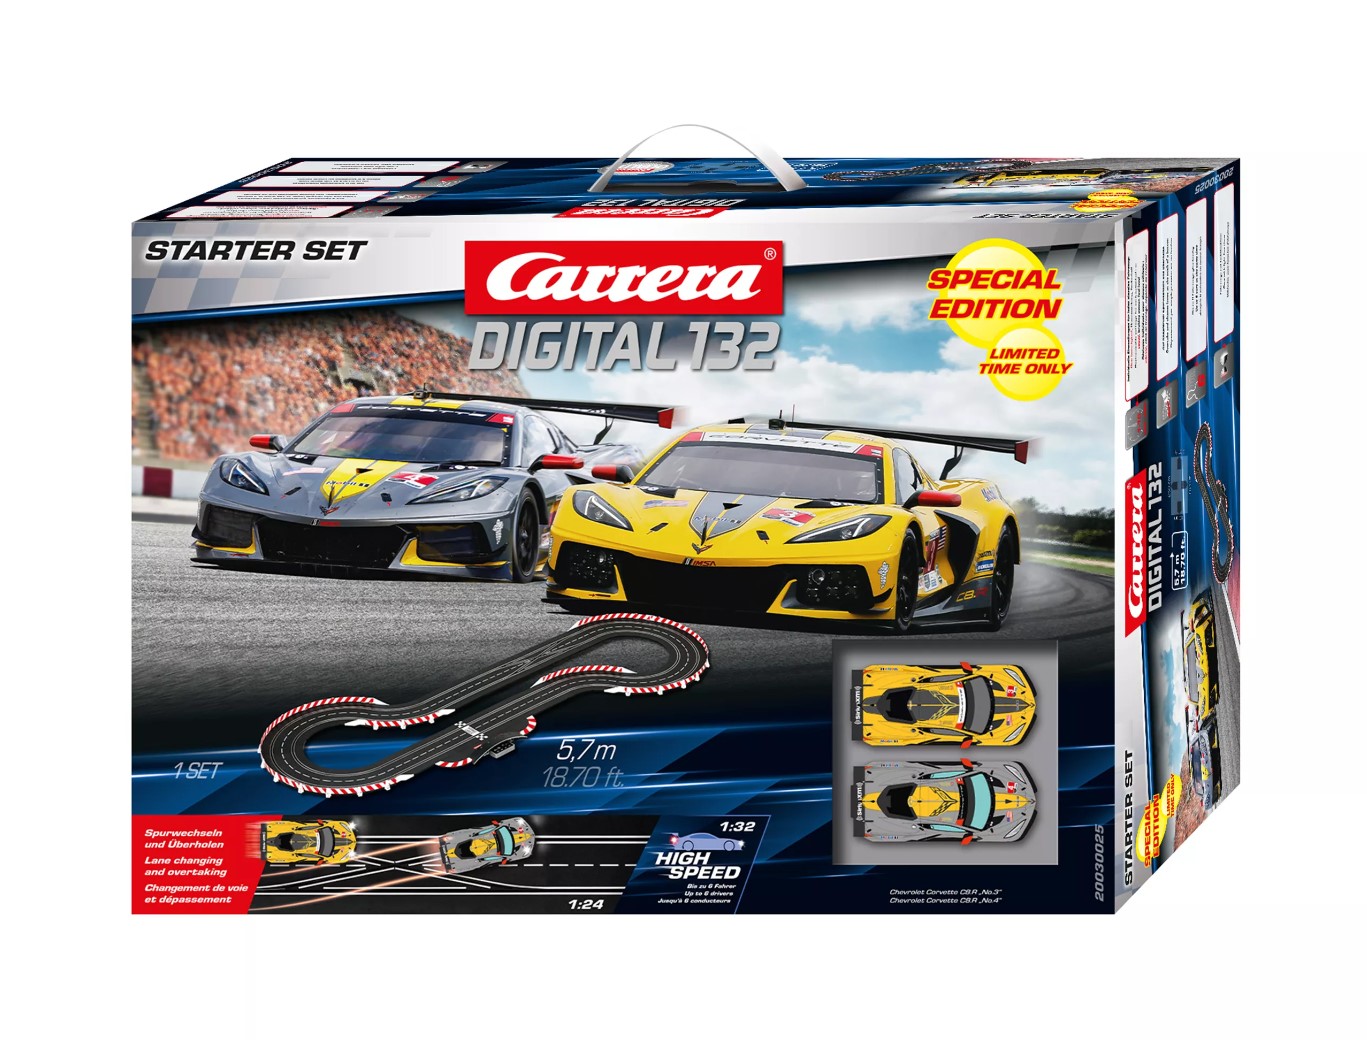 Carrera Digital 132 Racebaan Starter Set Special Edition 2022/23 - 20030025. Beste beginnersbaan digital 132 inhoud waard 299,95 euro nu 199,95